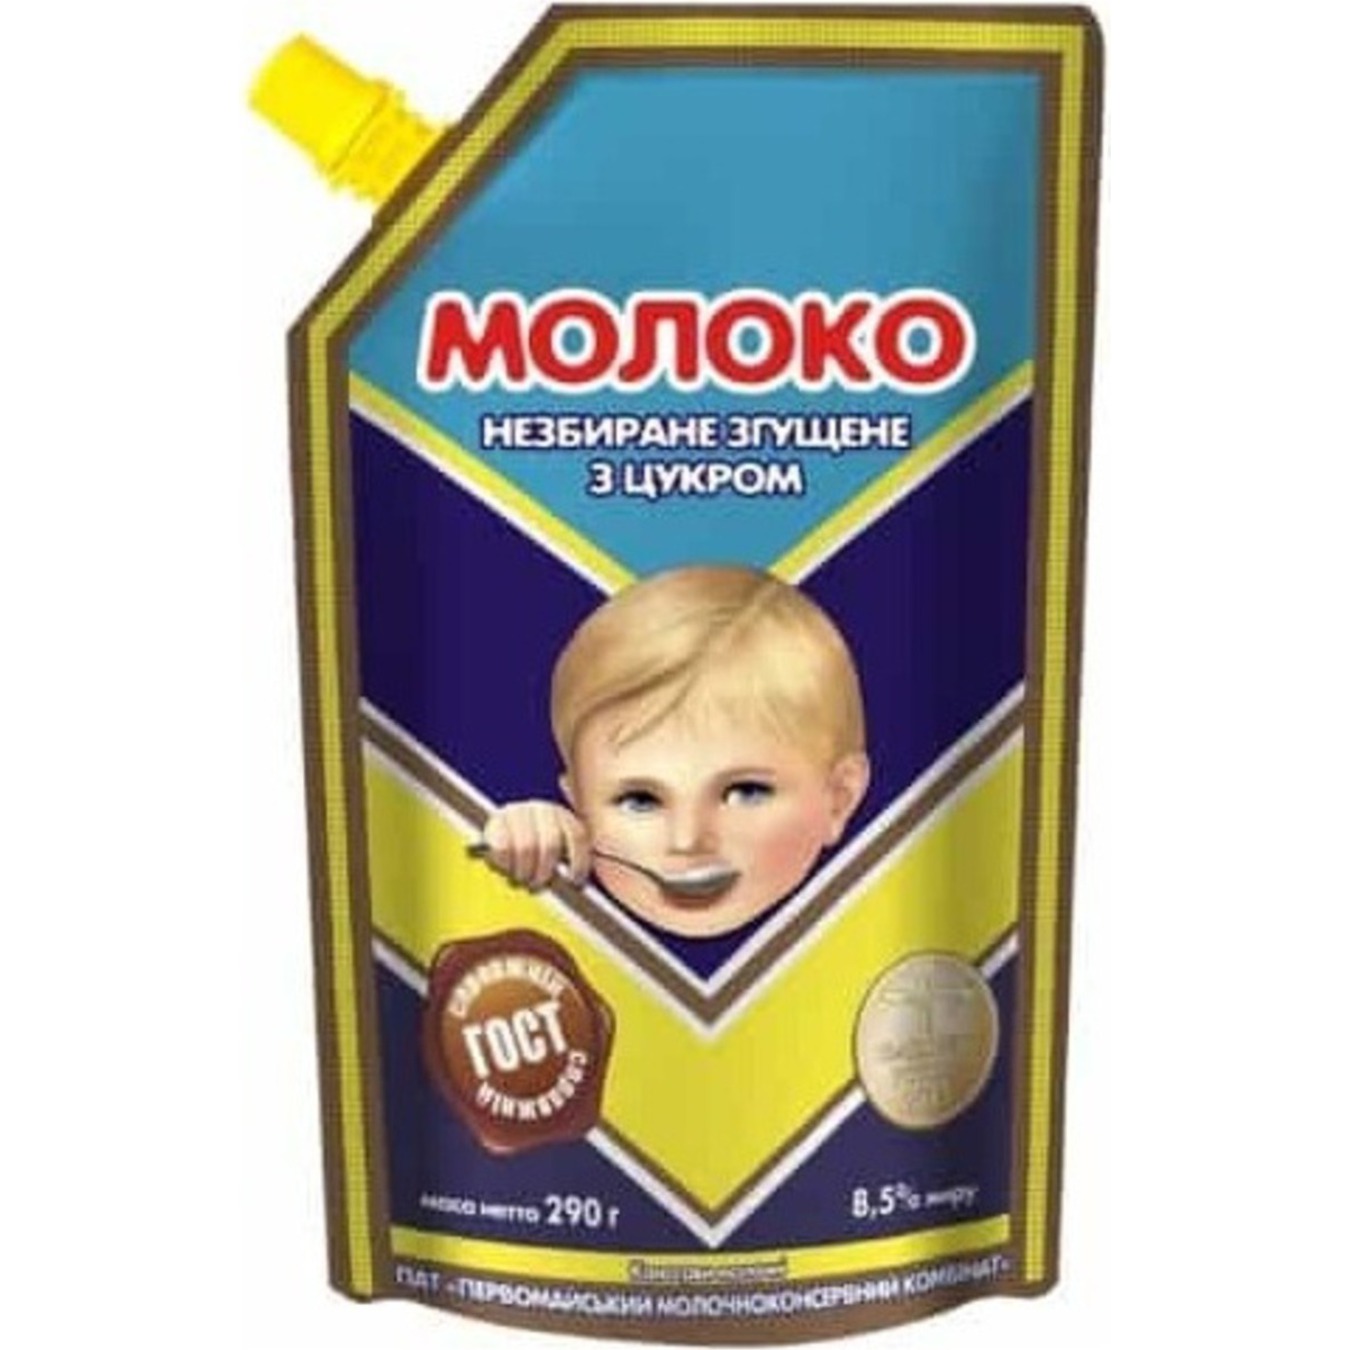 Молоко згущене Первомайський МКК незбиране з цукром 8,5% 290г